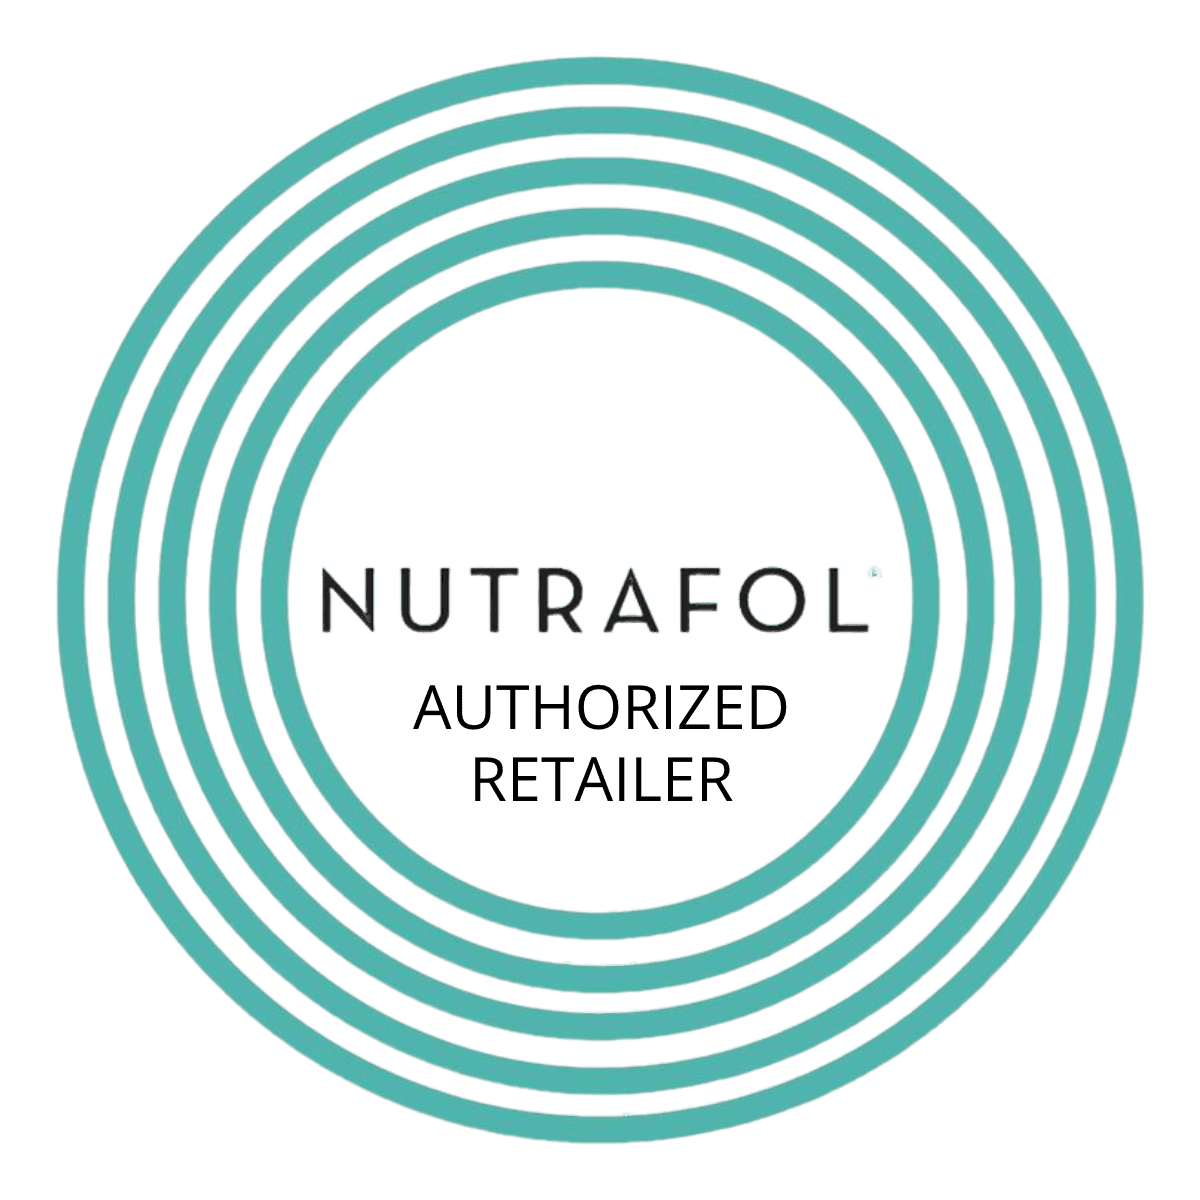 Nutrafol Authorized Retailer